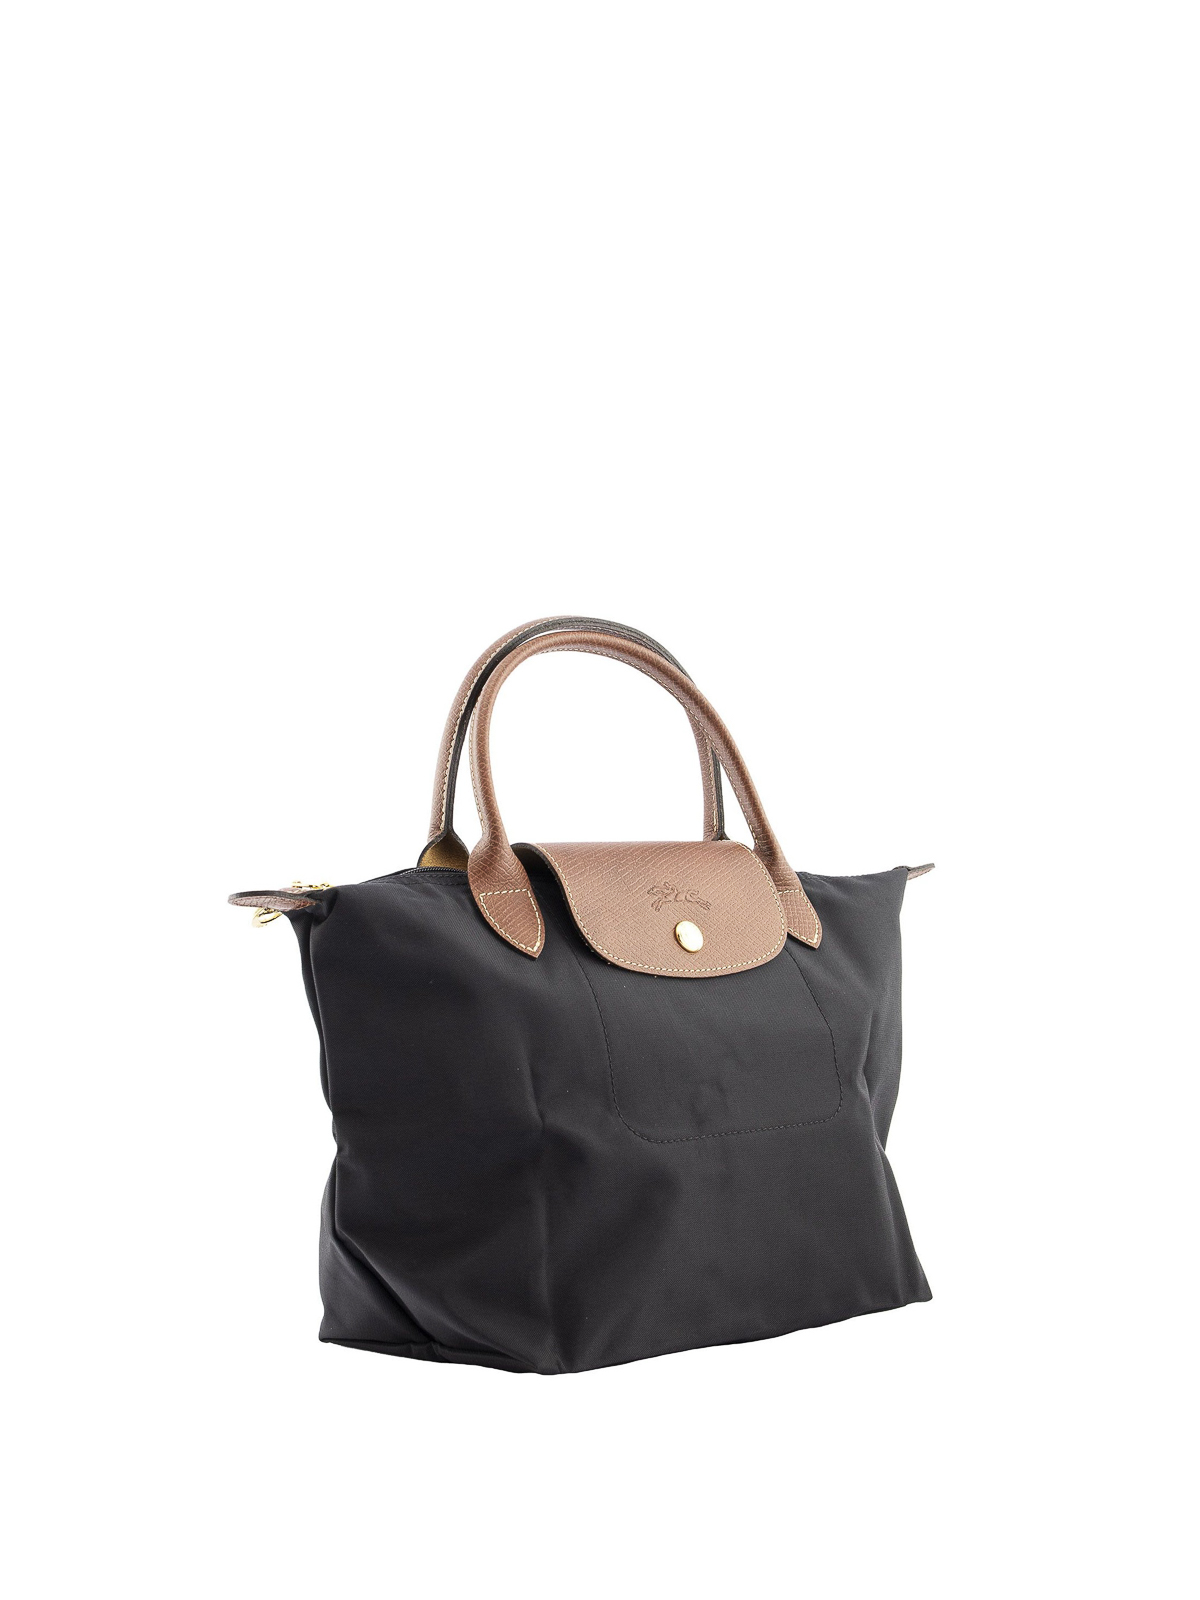 længes efter Tilgivende ekstremt Totes bags Longchamp - Le Pliage mini handbag - 1621089001